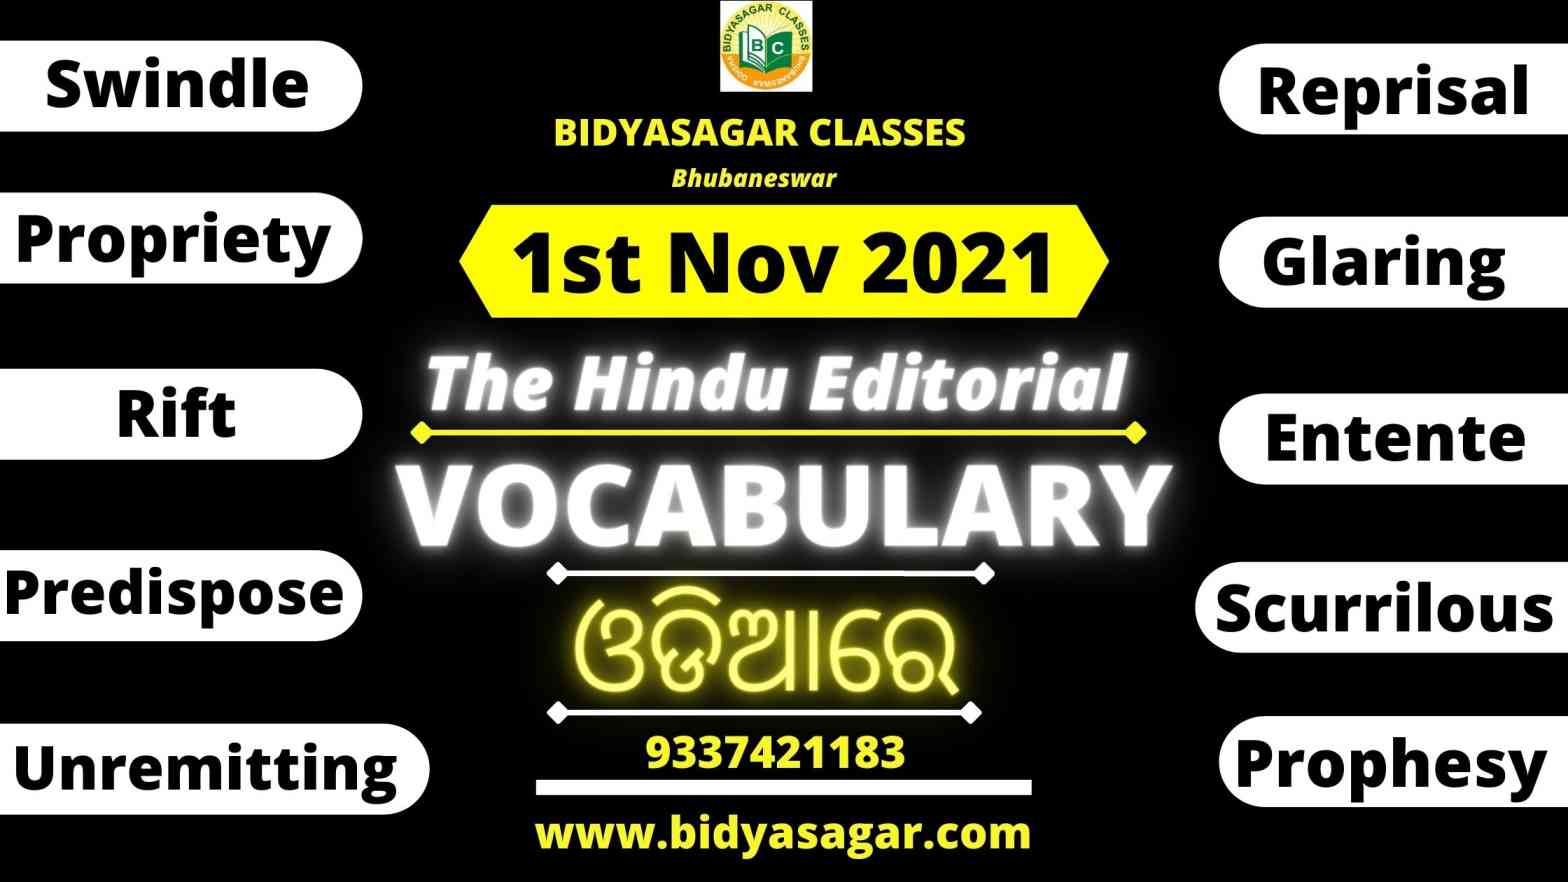 The Hindu Editorial Vocabulary of 1st November 2021